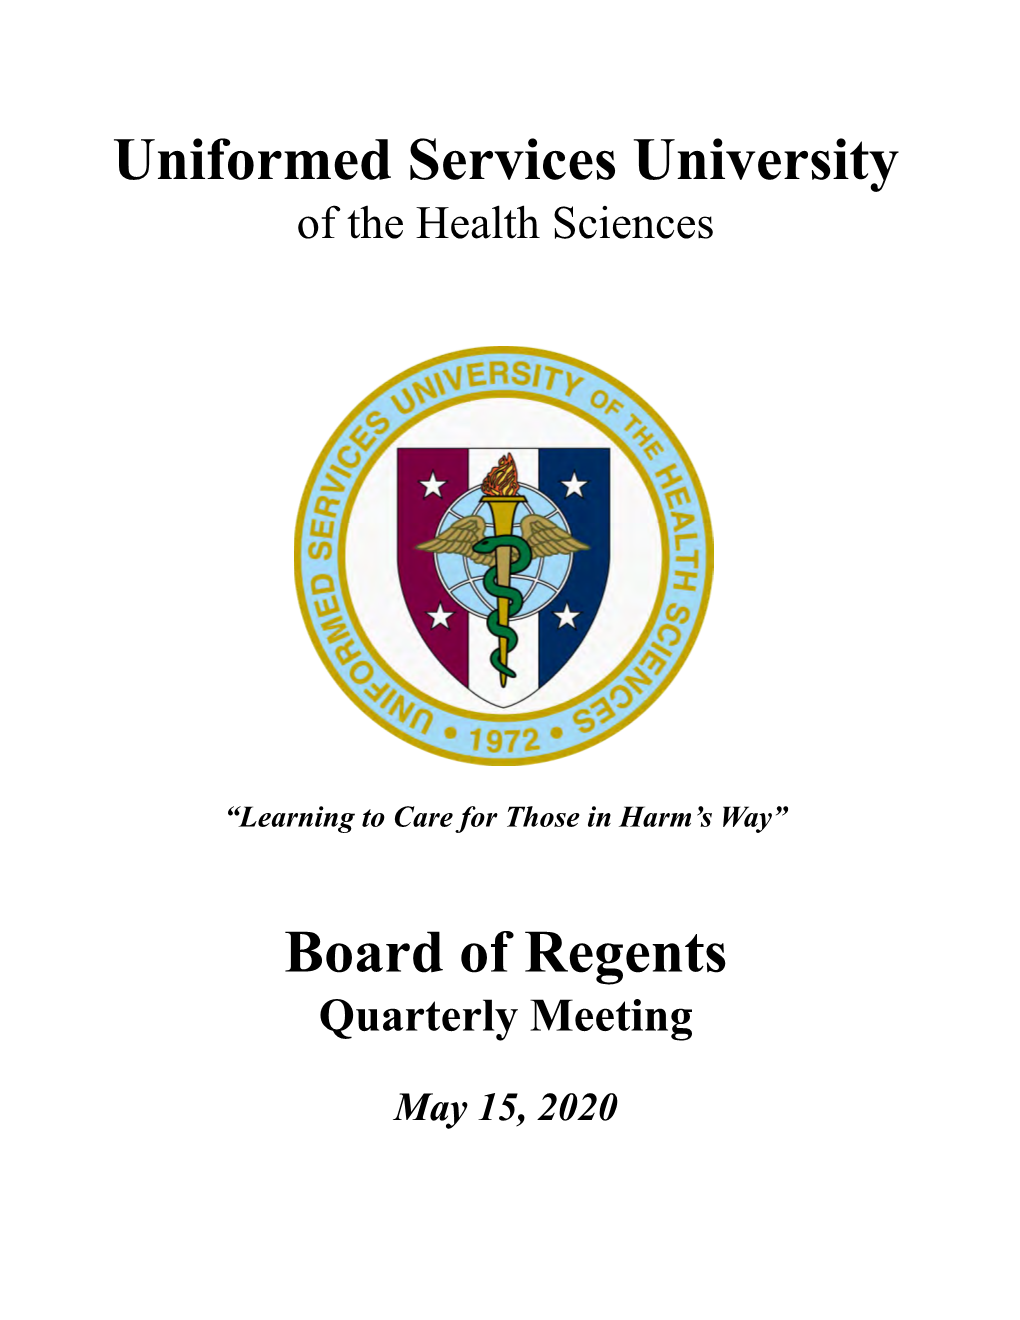 USU Board of Regents Meeting Materials May 2020